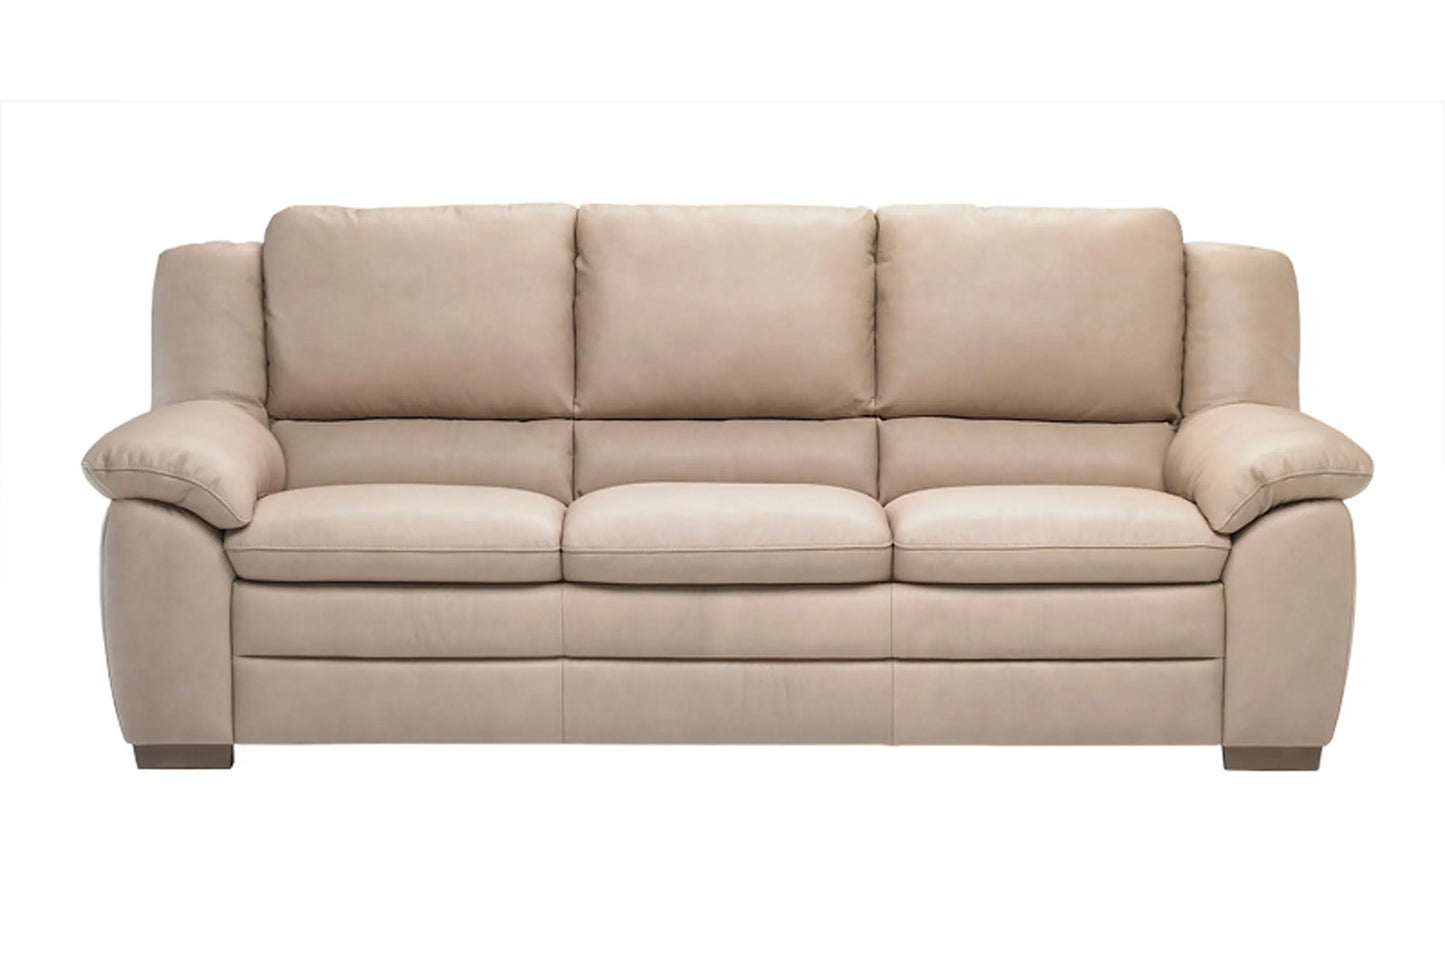 Natuzzi Italian Tan Suede Leather Absolute Comfort Sofa 91" X 37" X 37"